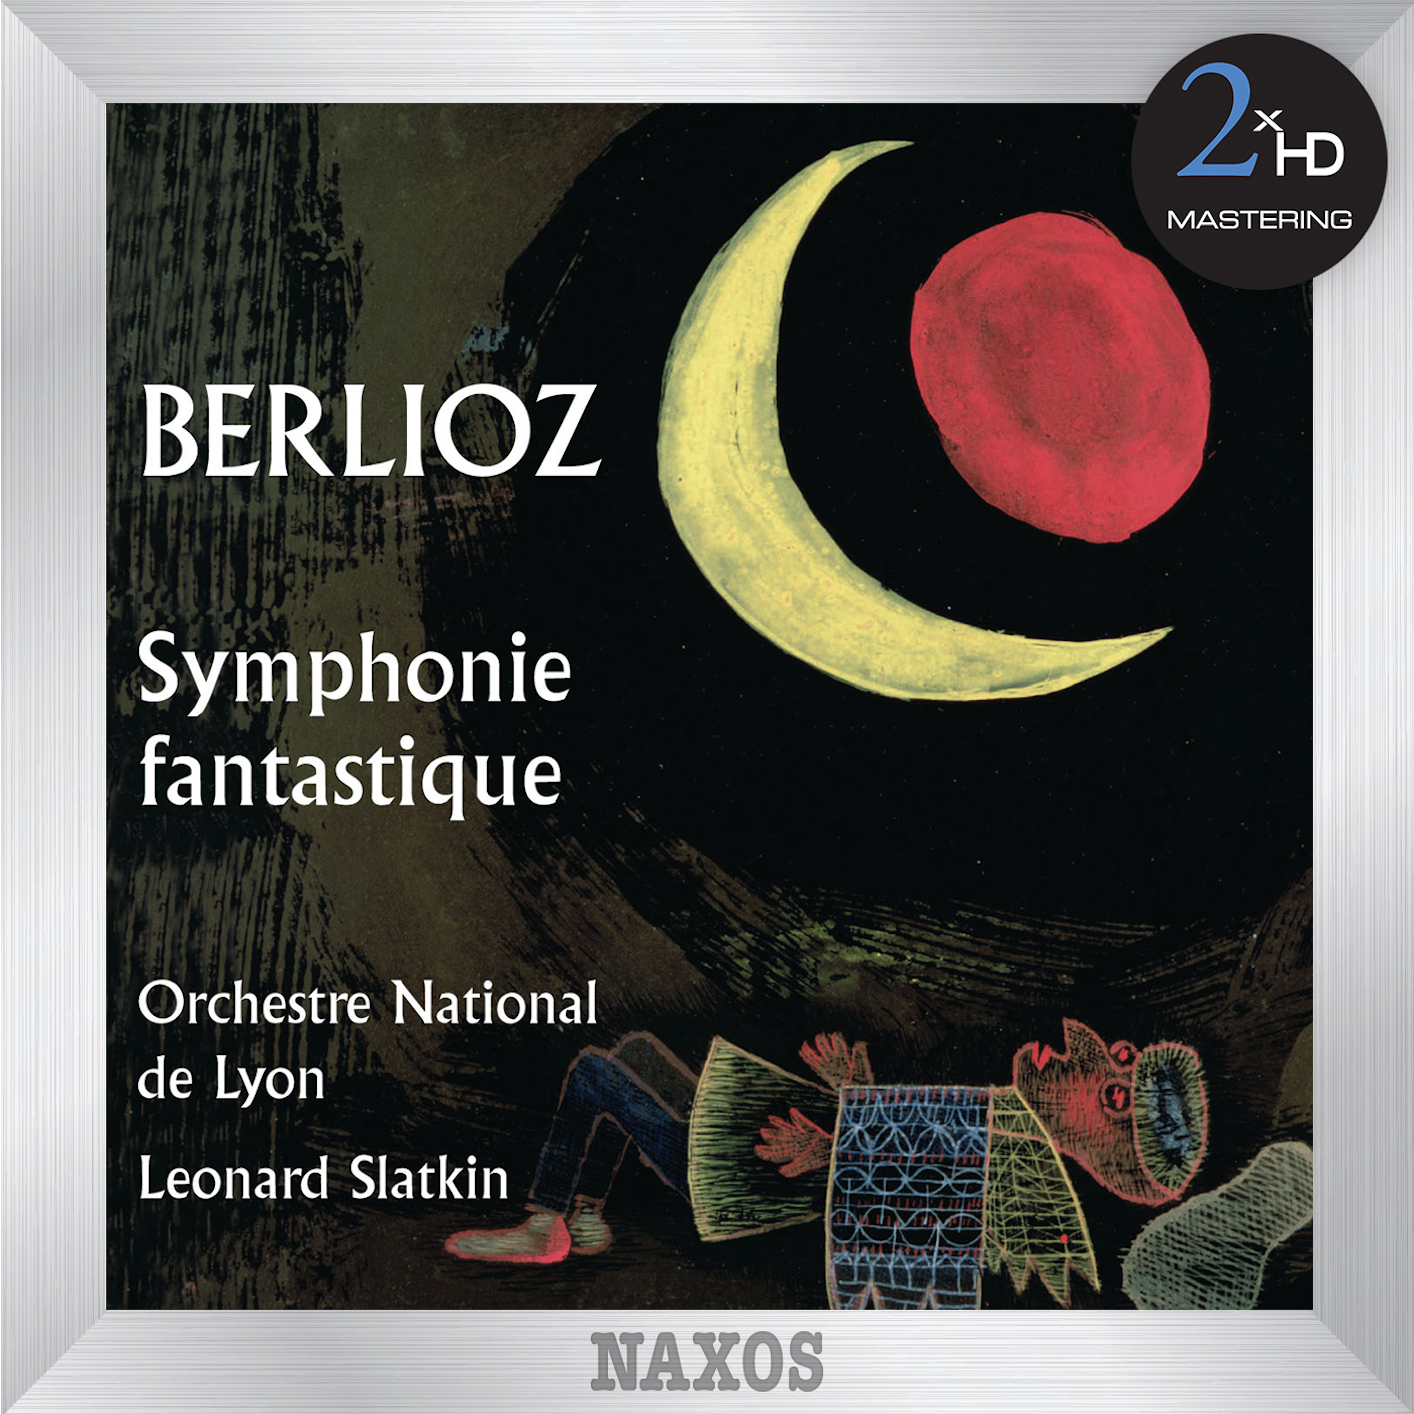 Lyon National Orchestra & Leonard Slatkin - Berlioz: Symphonie fantastique (2015) [FLAC 24bit/192kHz]